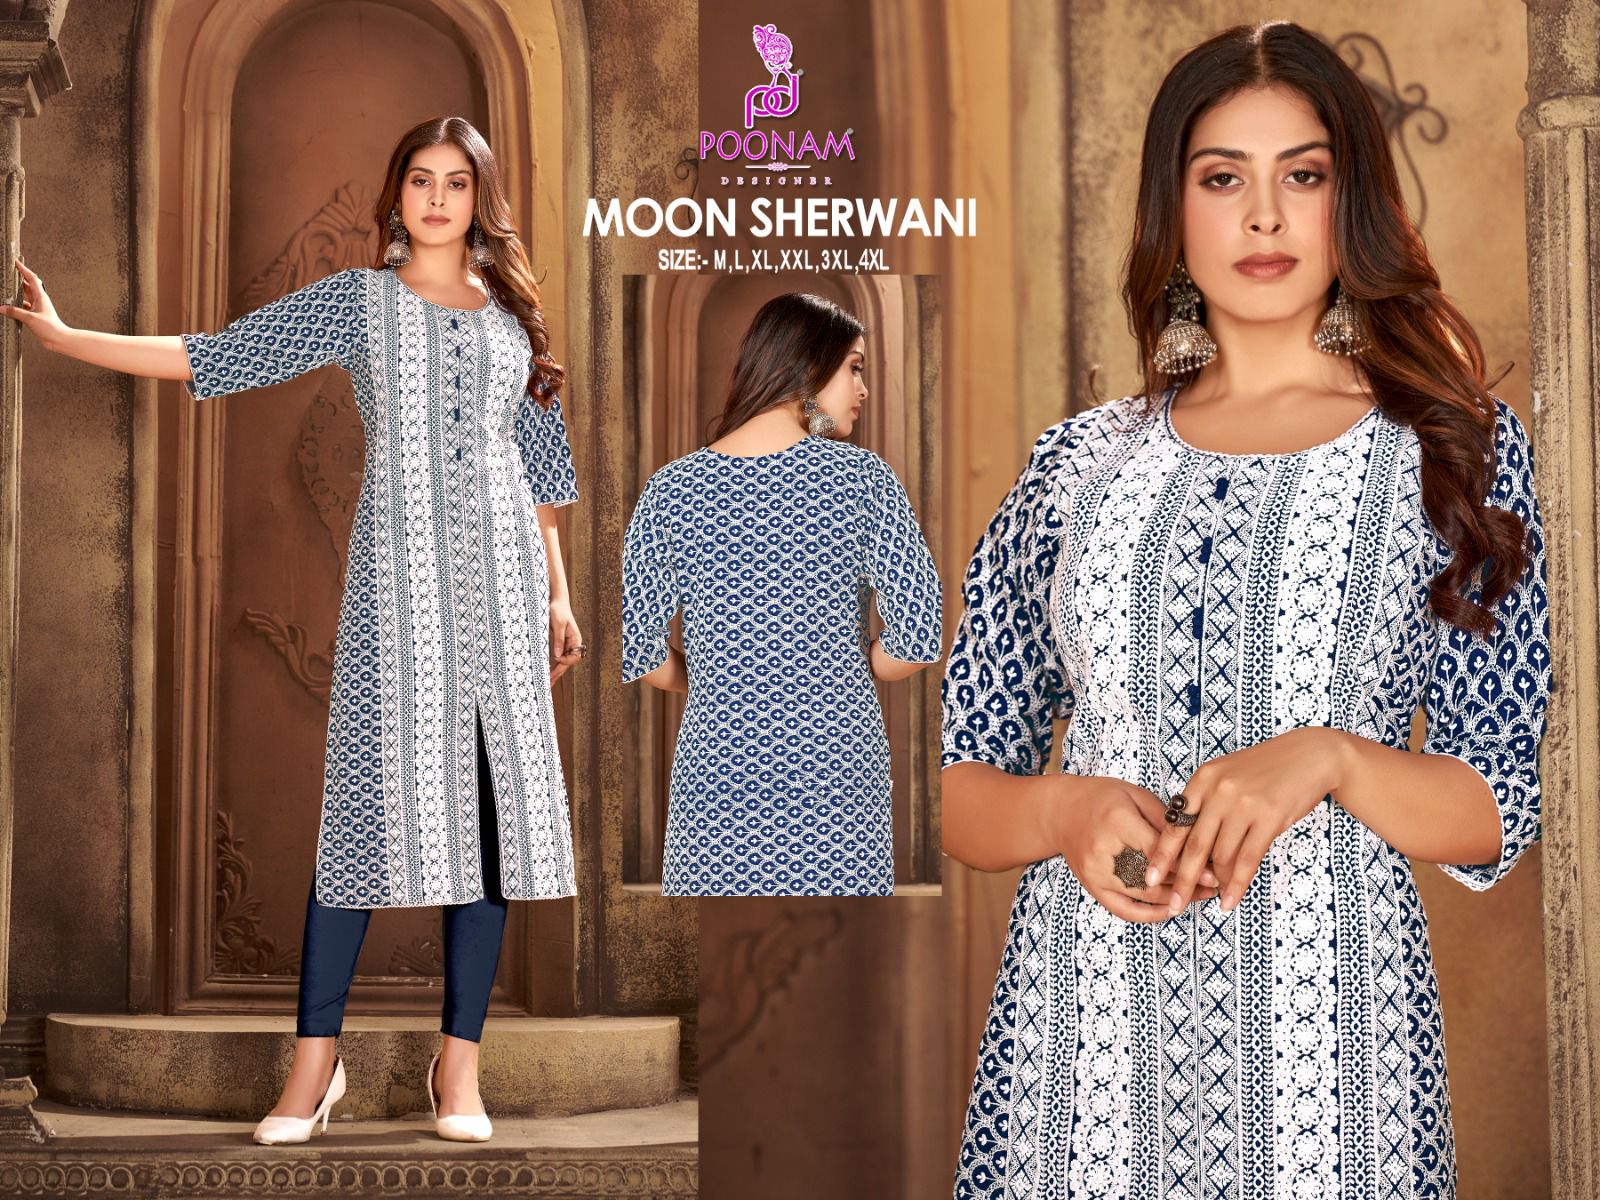 Poonam Designer Moon Sherwani 1001